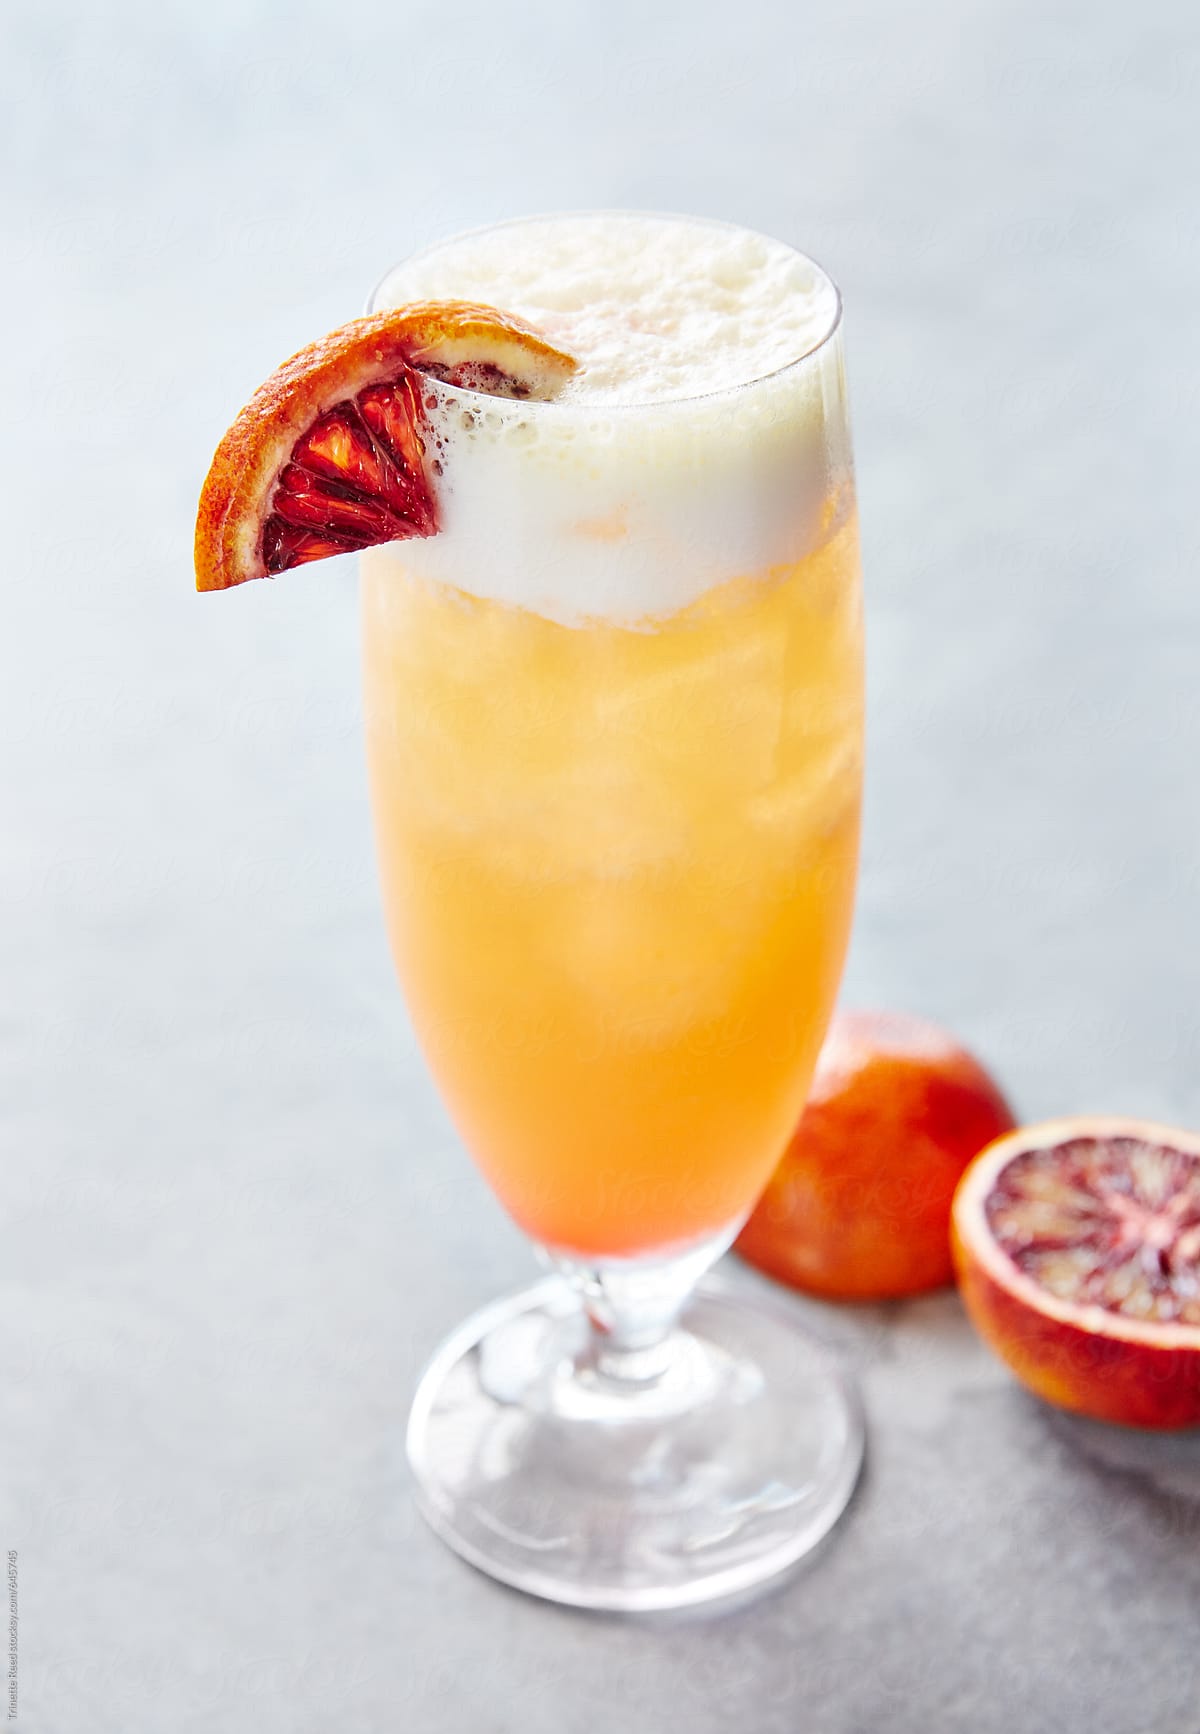 Blood orange vodka signature cocktail on bar